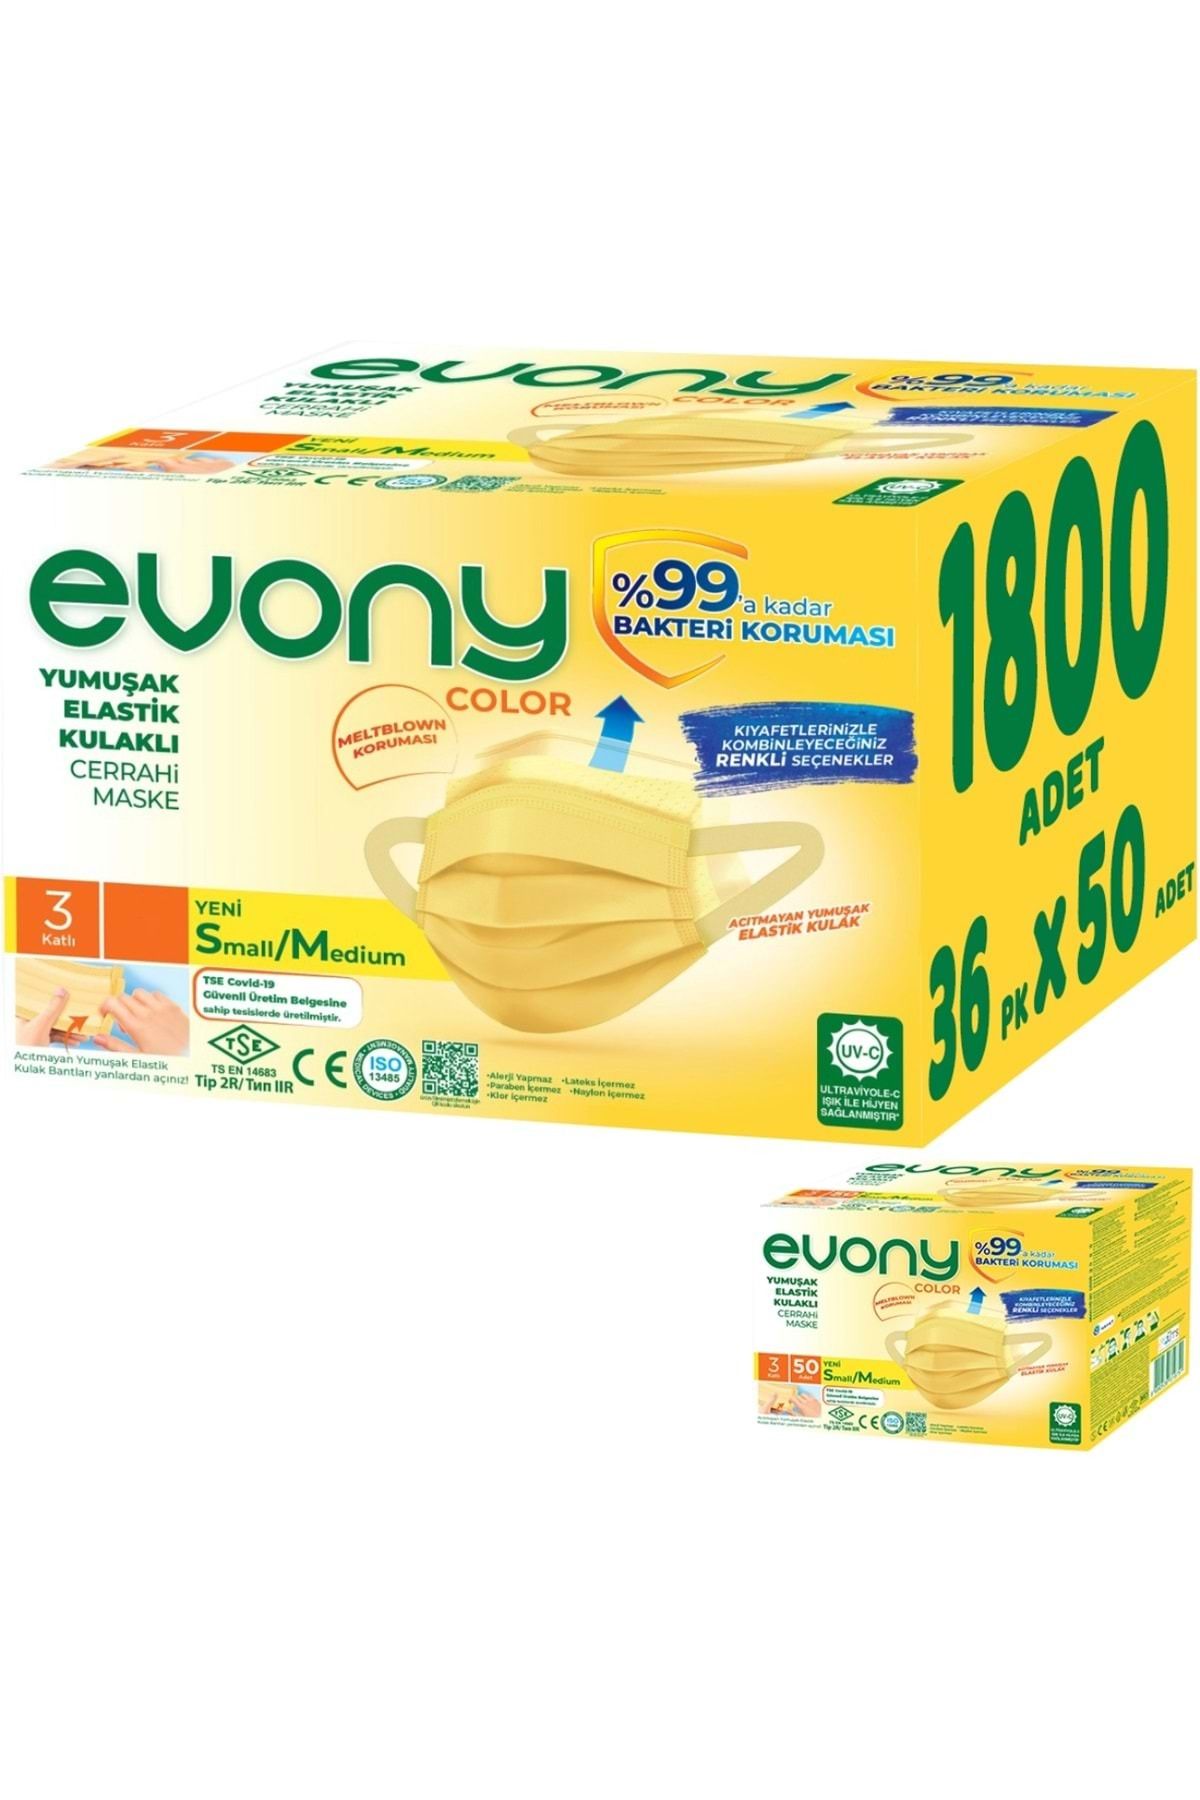 Evony 3 Katlı Filtreli Burun Telli Cerrahi Maske 1800 Lü Set Small/medium Sarı 160*90mm (36pk*50)